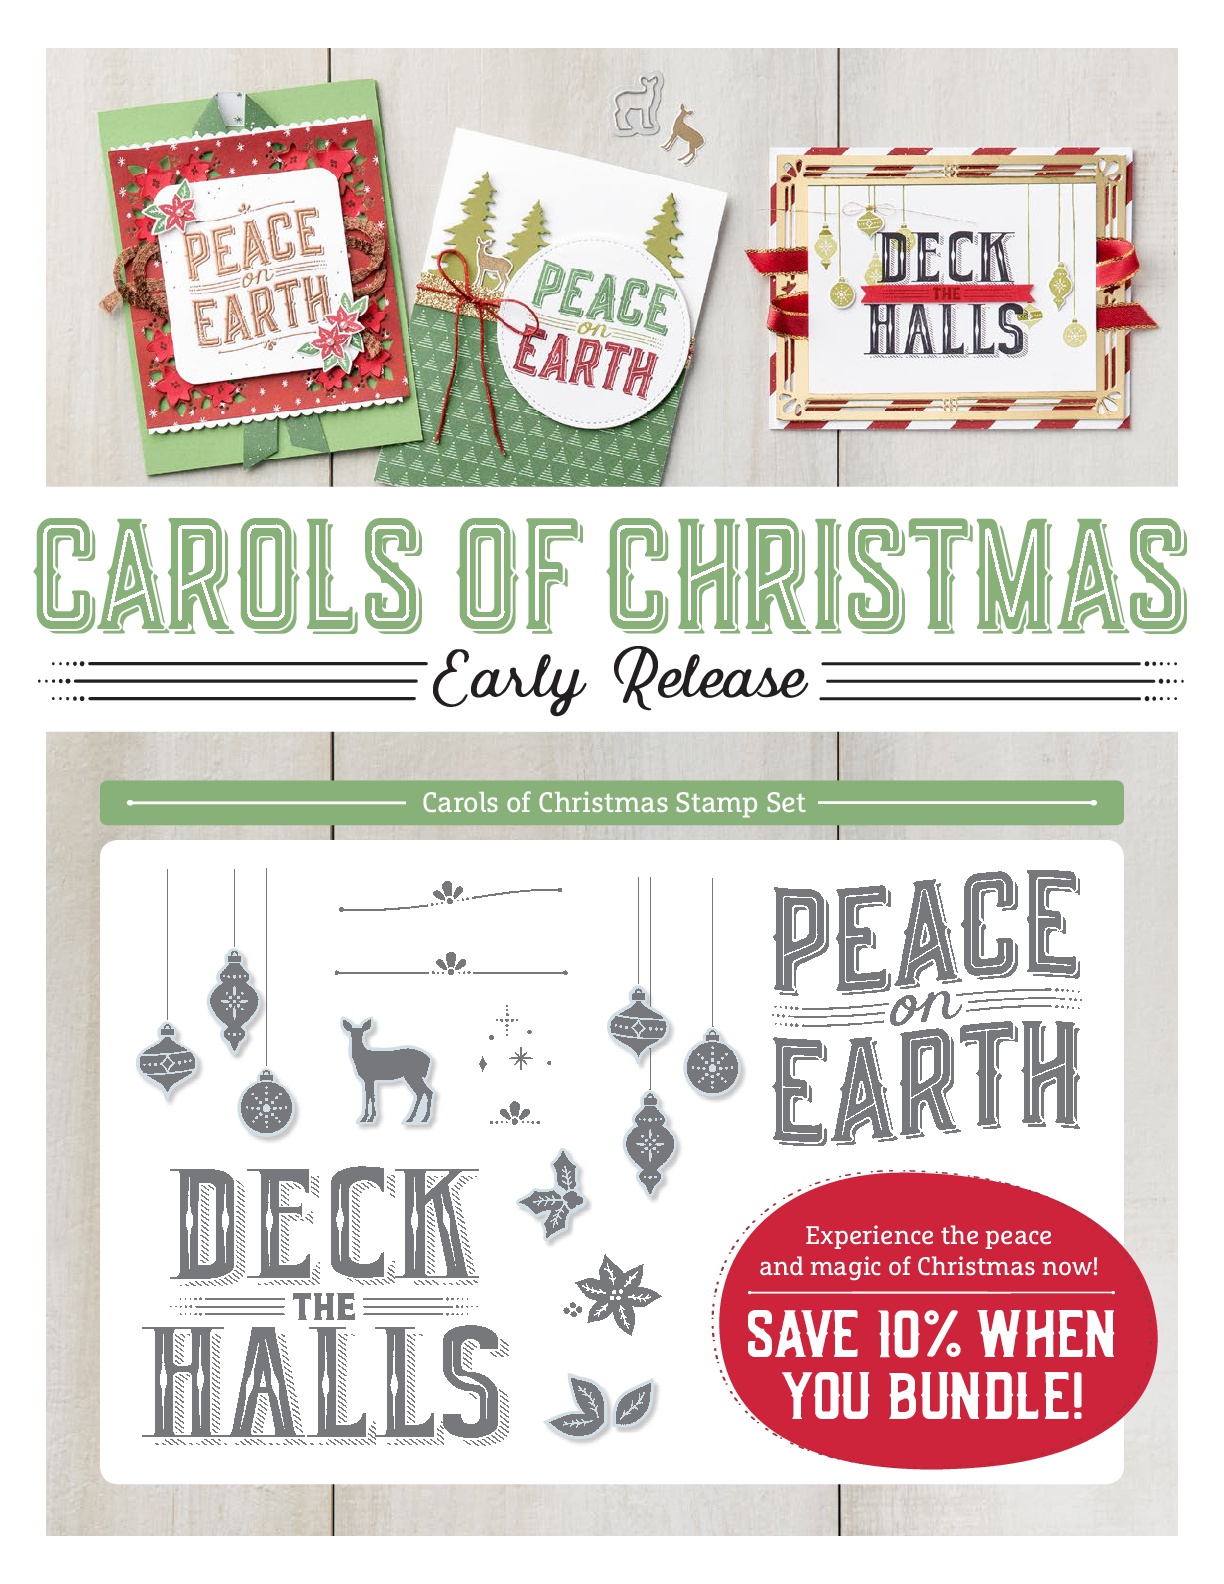 Carols-of-Christmas-flyer-001